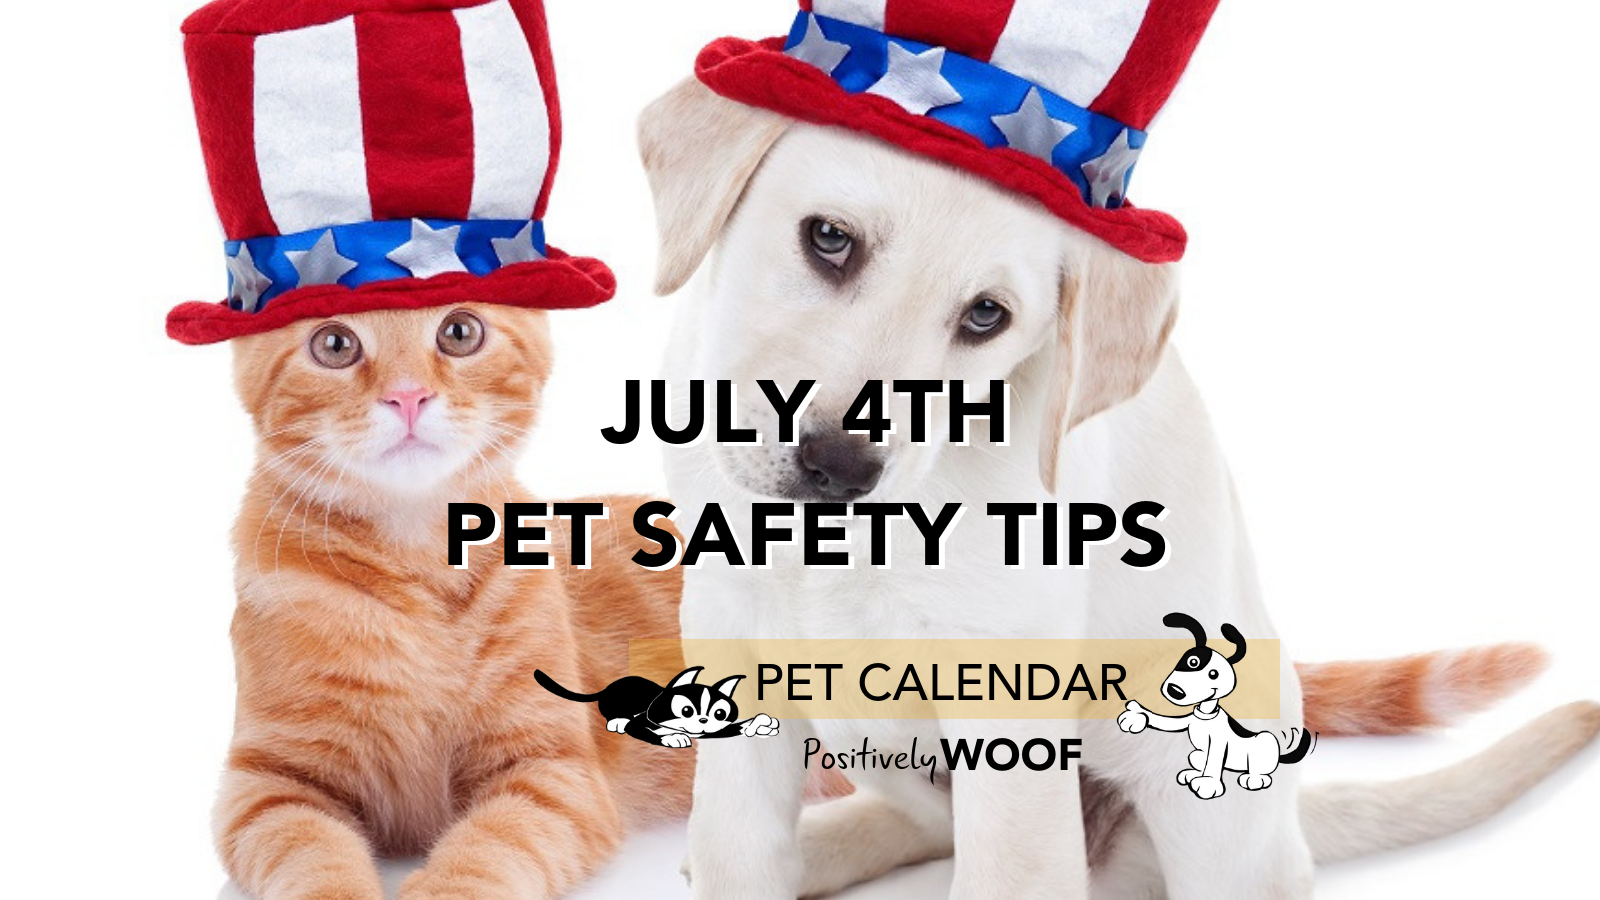 Pet Calendar: July 4th Pet Safety Tips